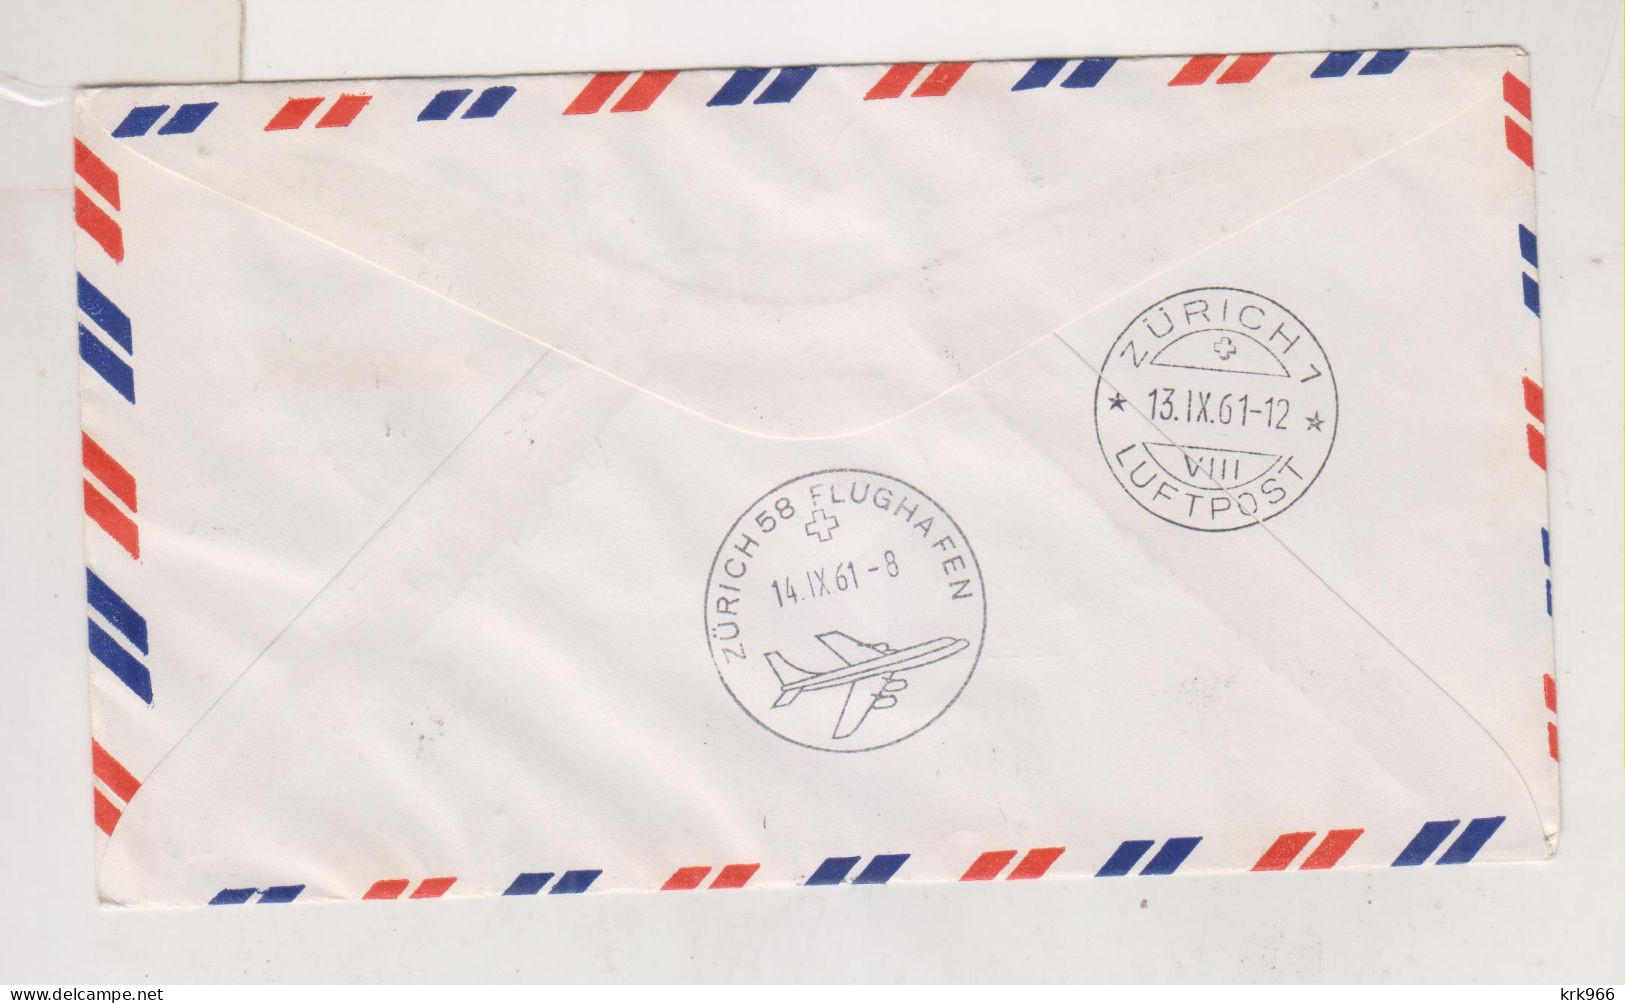 INDIA, 1961 Airmail Cover To Switzerland - Posta Aerea